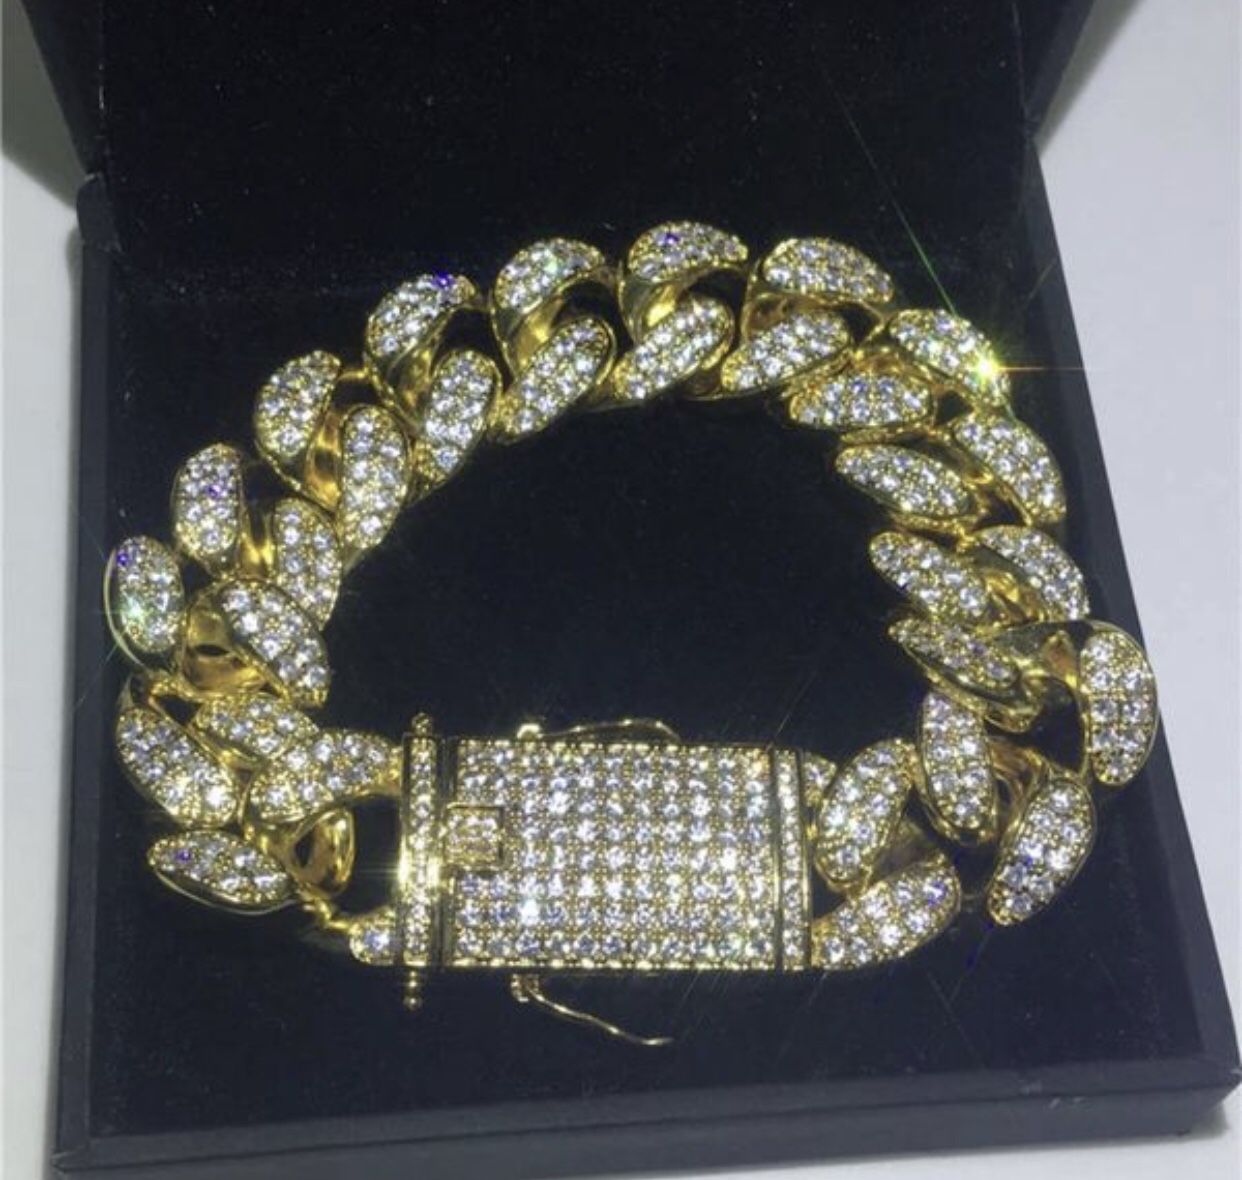 New 18 k yellow gold Cuban link bracelet